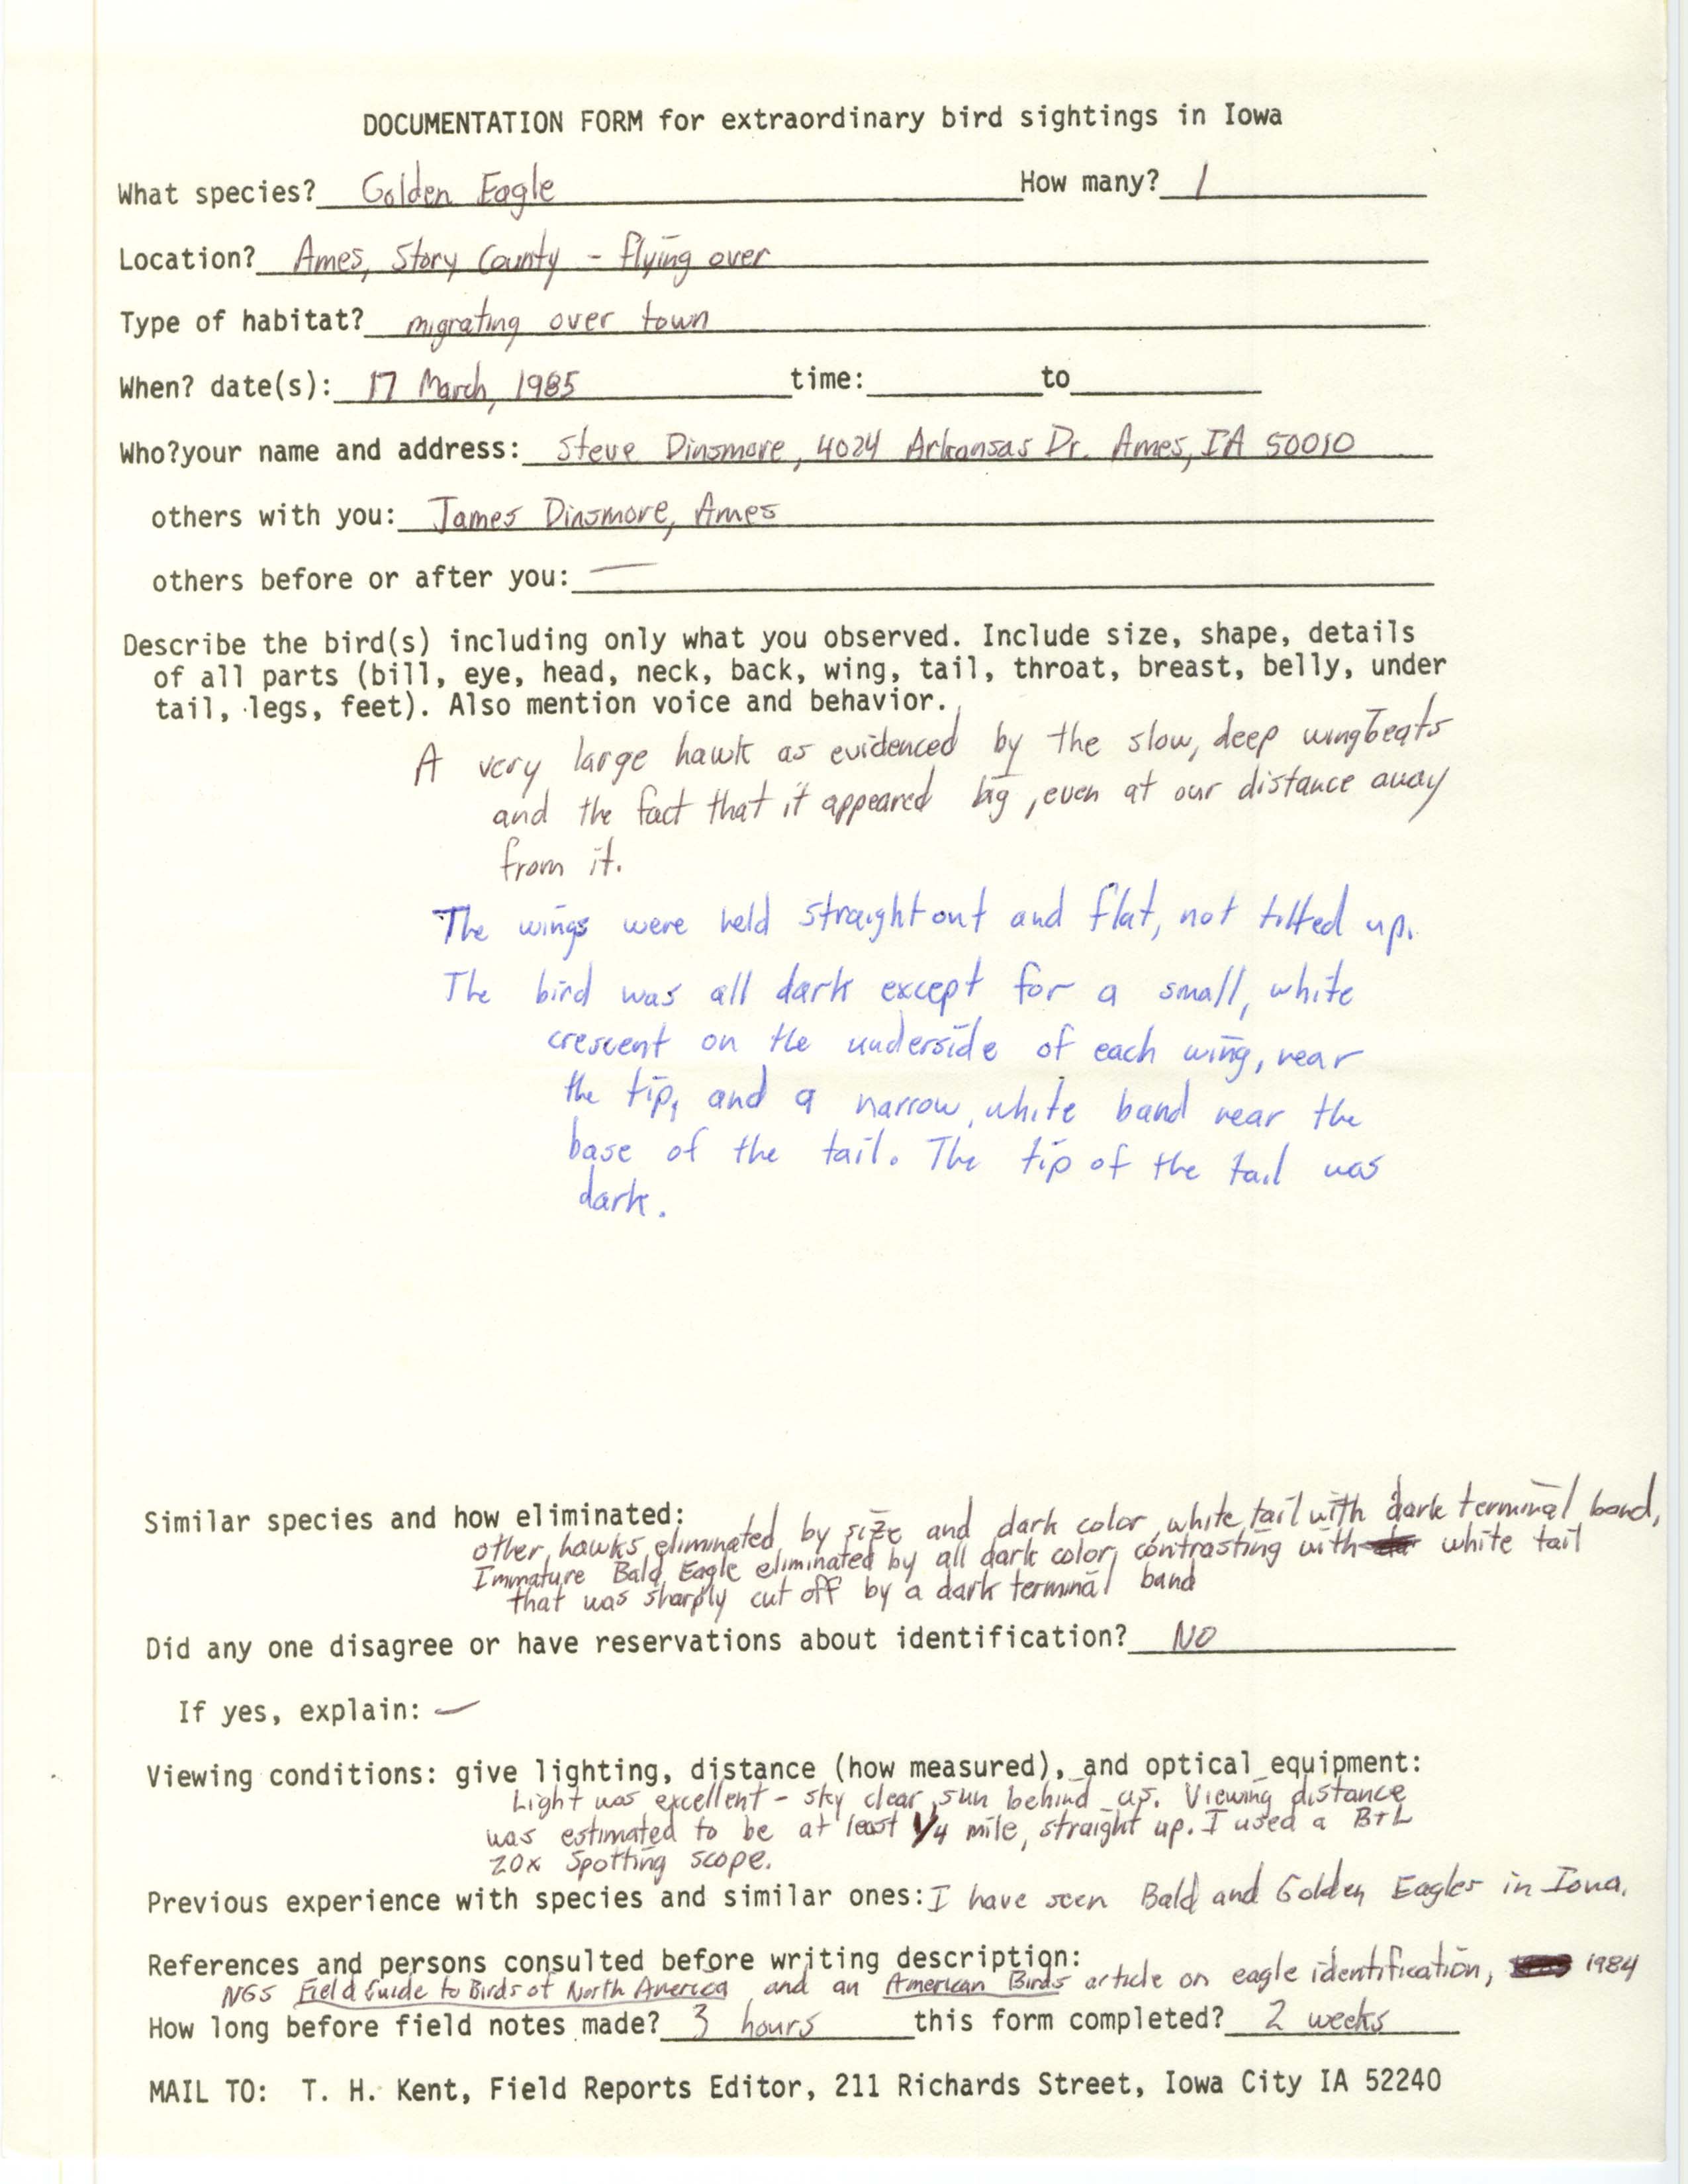 Rare bird documentation form for Golden Eagle at Ames, 1985